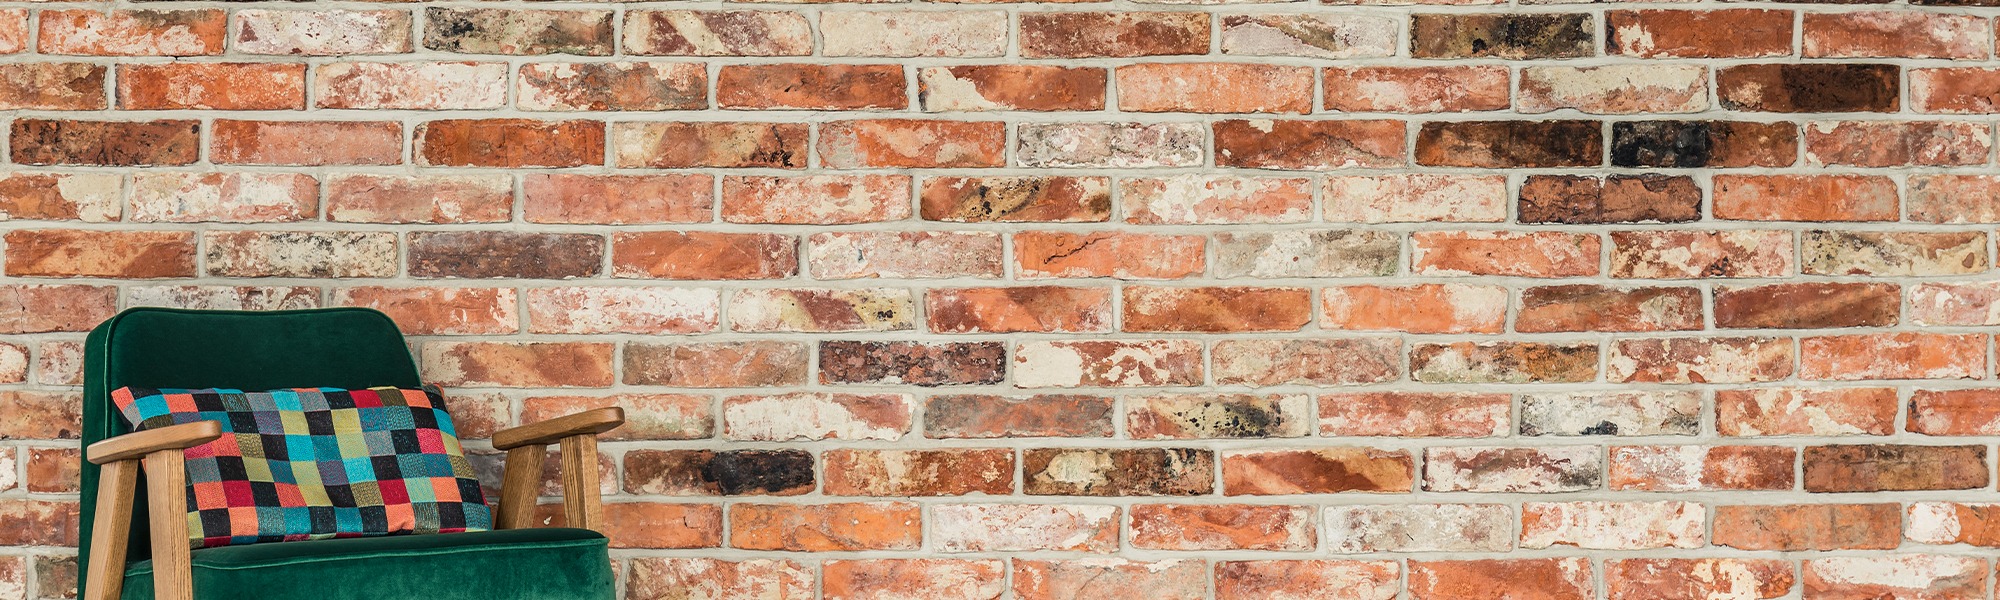 brick wall jpg